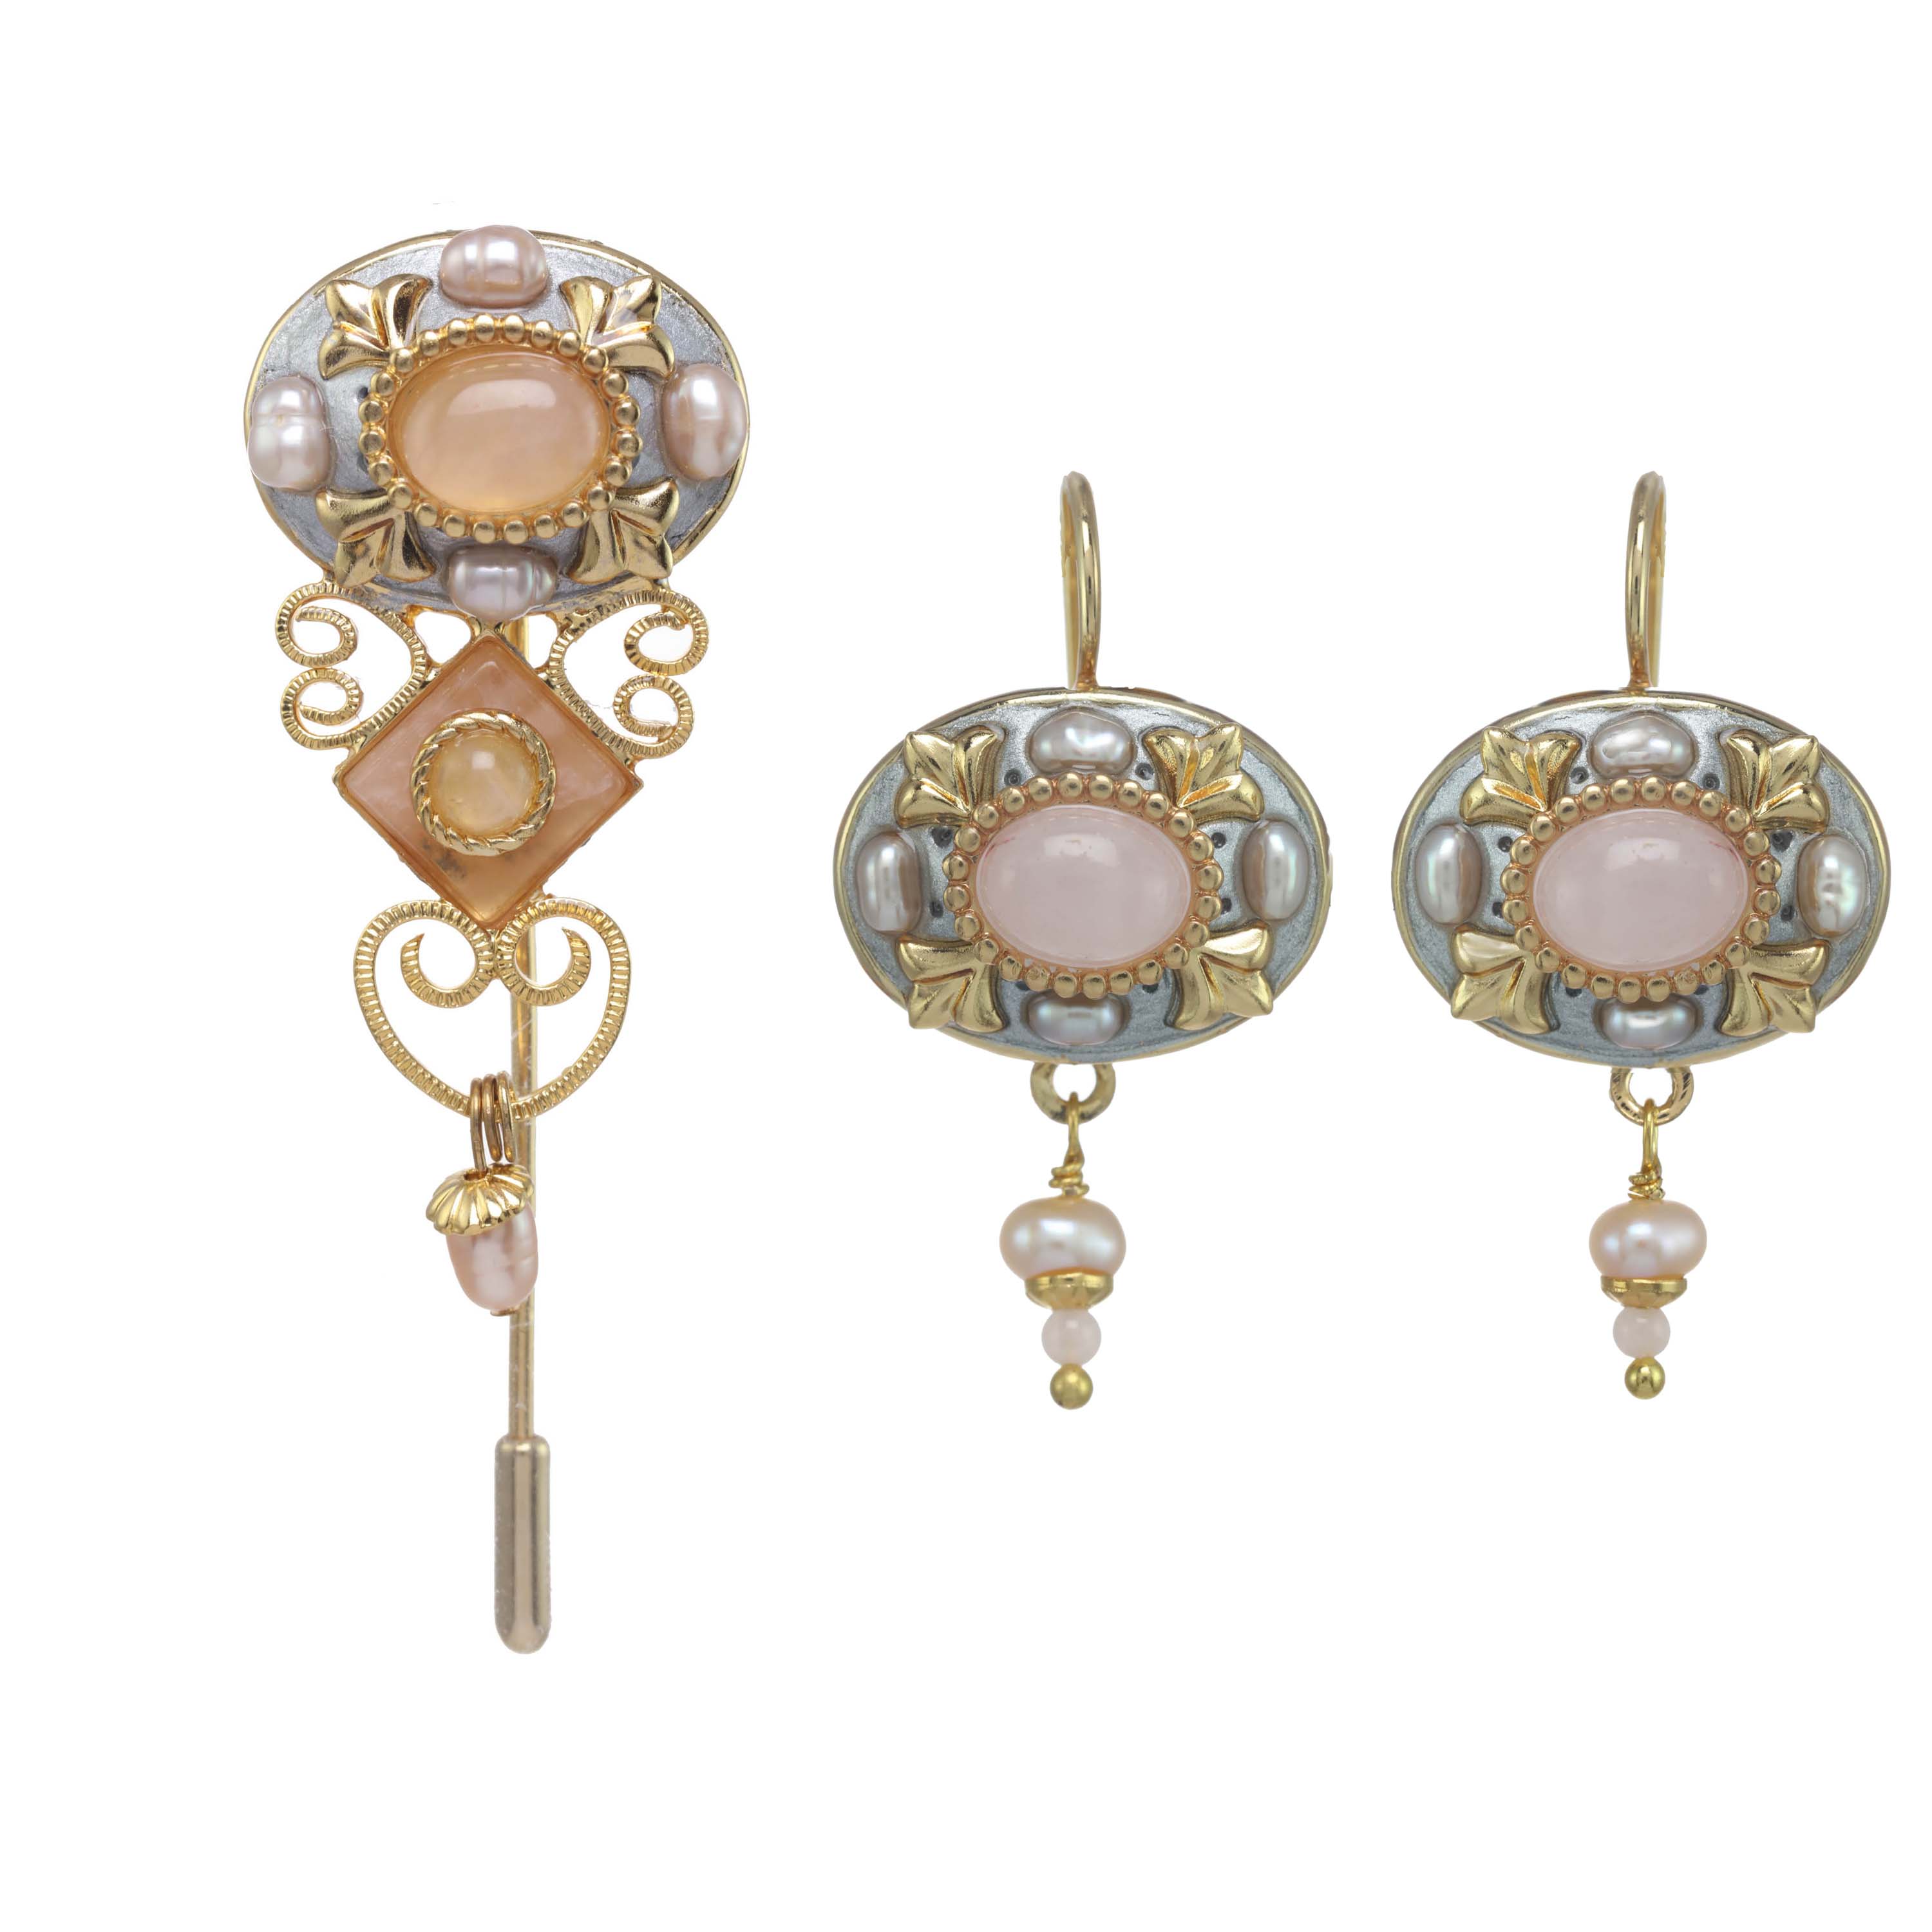 Rose Quartz Pin and Earrings Set